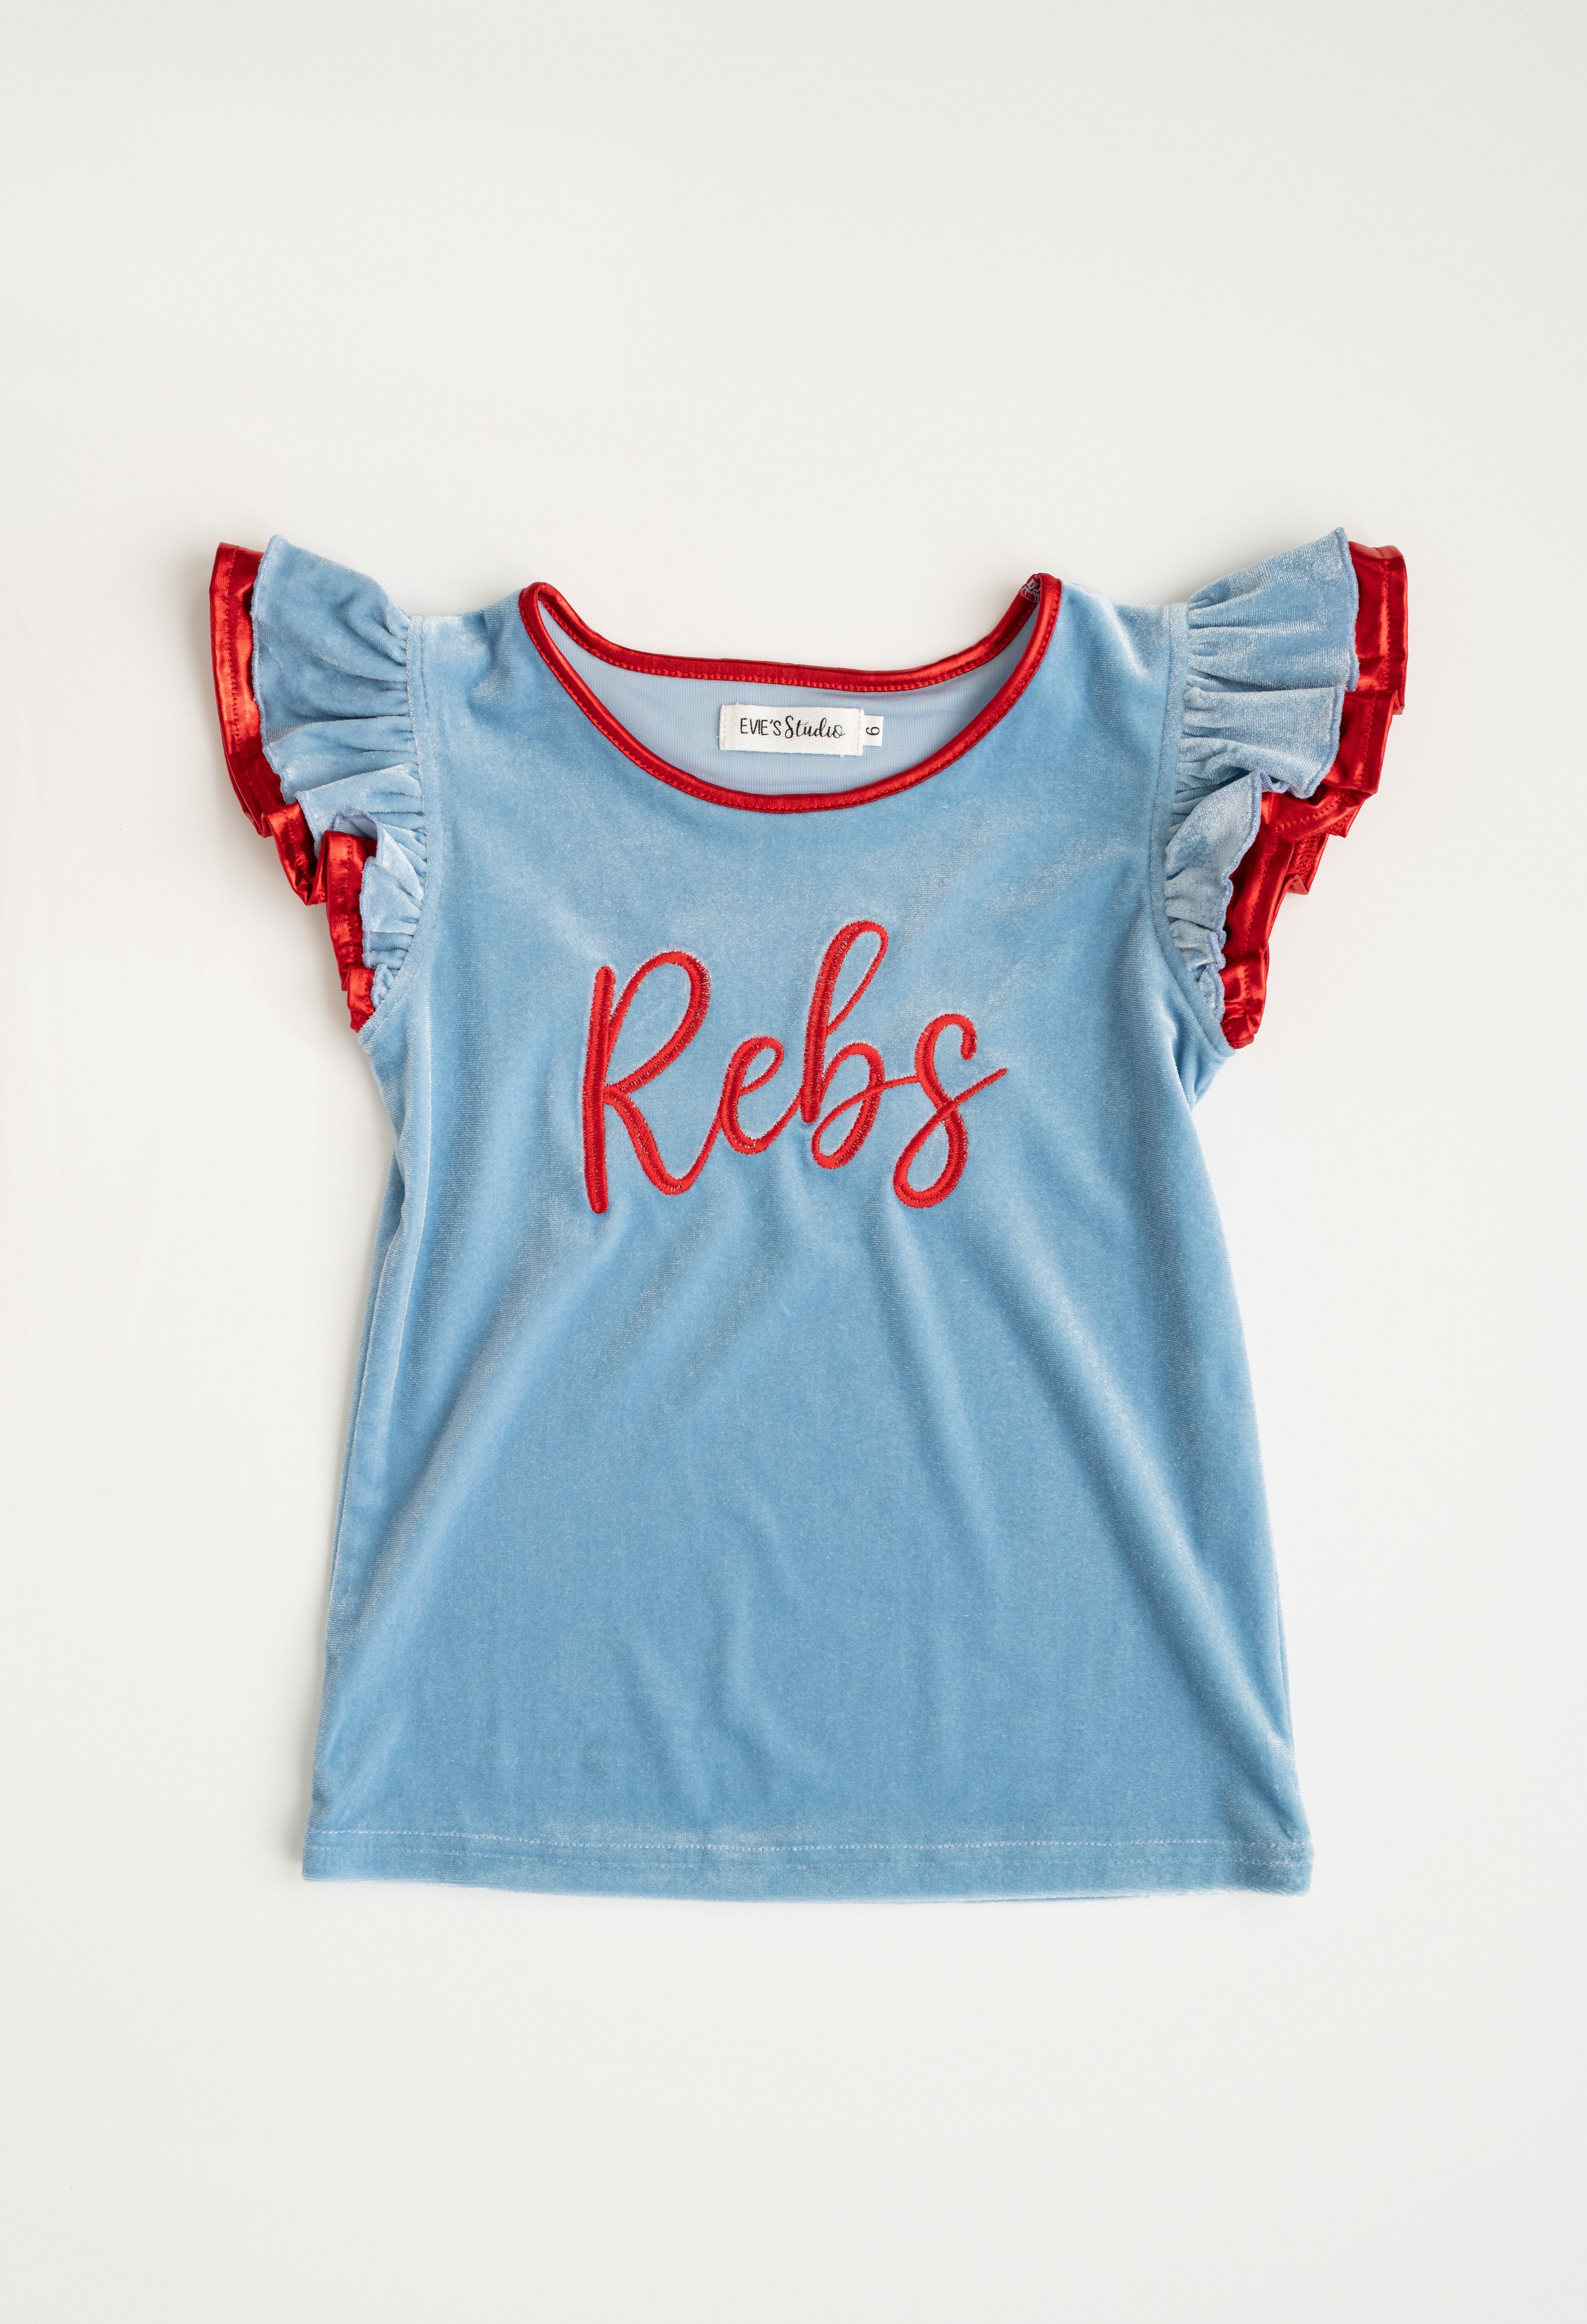 Rebs Velvet Shirt - Evie's Closet Clothing